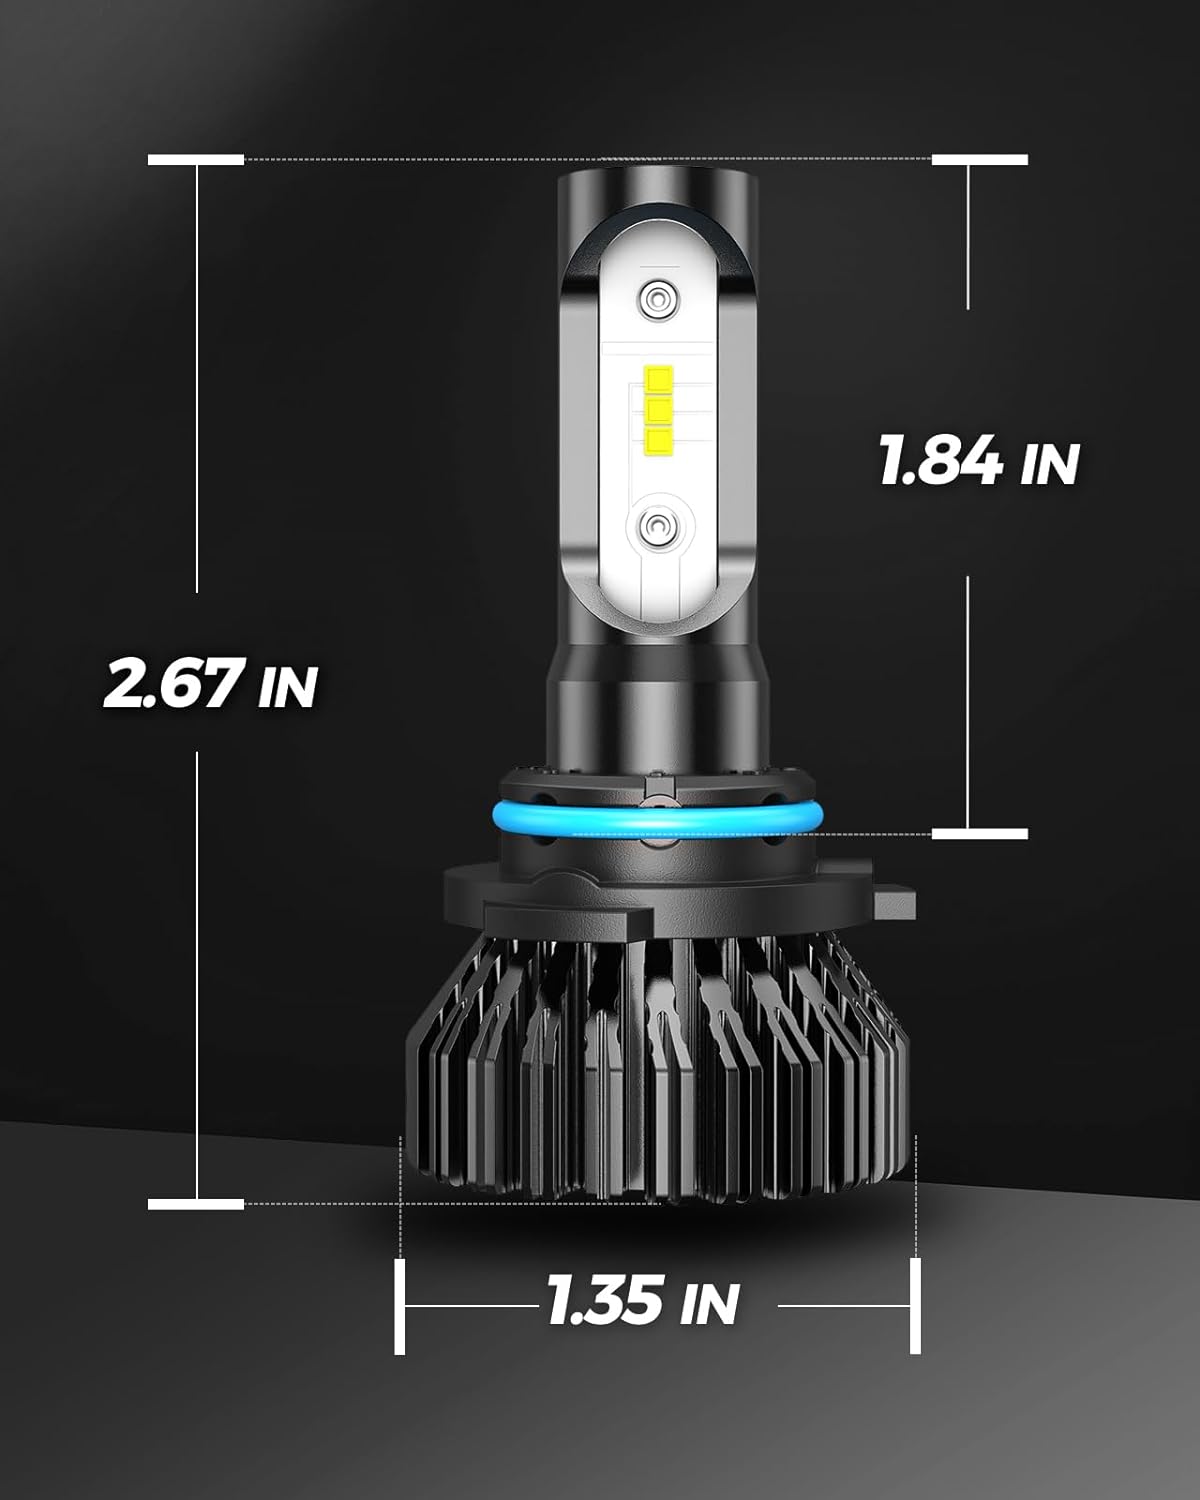 Marsauto 9005 Fog Light Bulbs Review